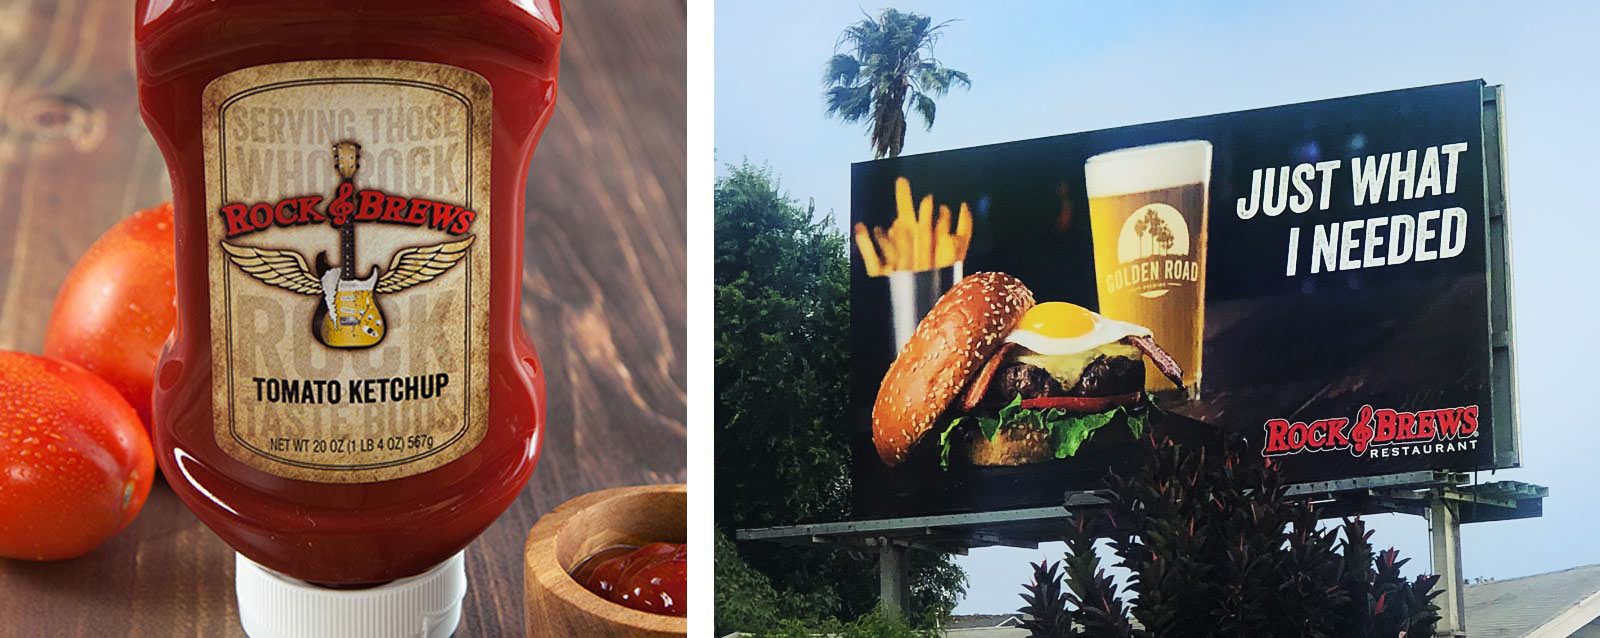 Rock & Brews ketchup label and billboard